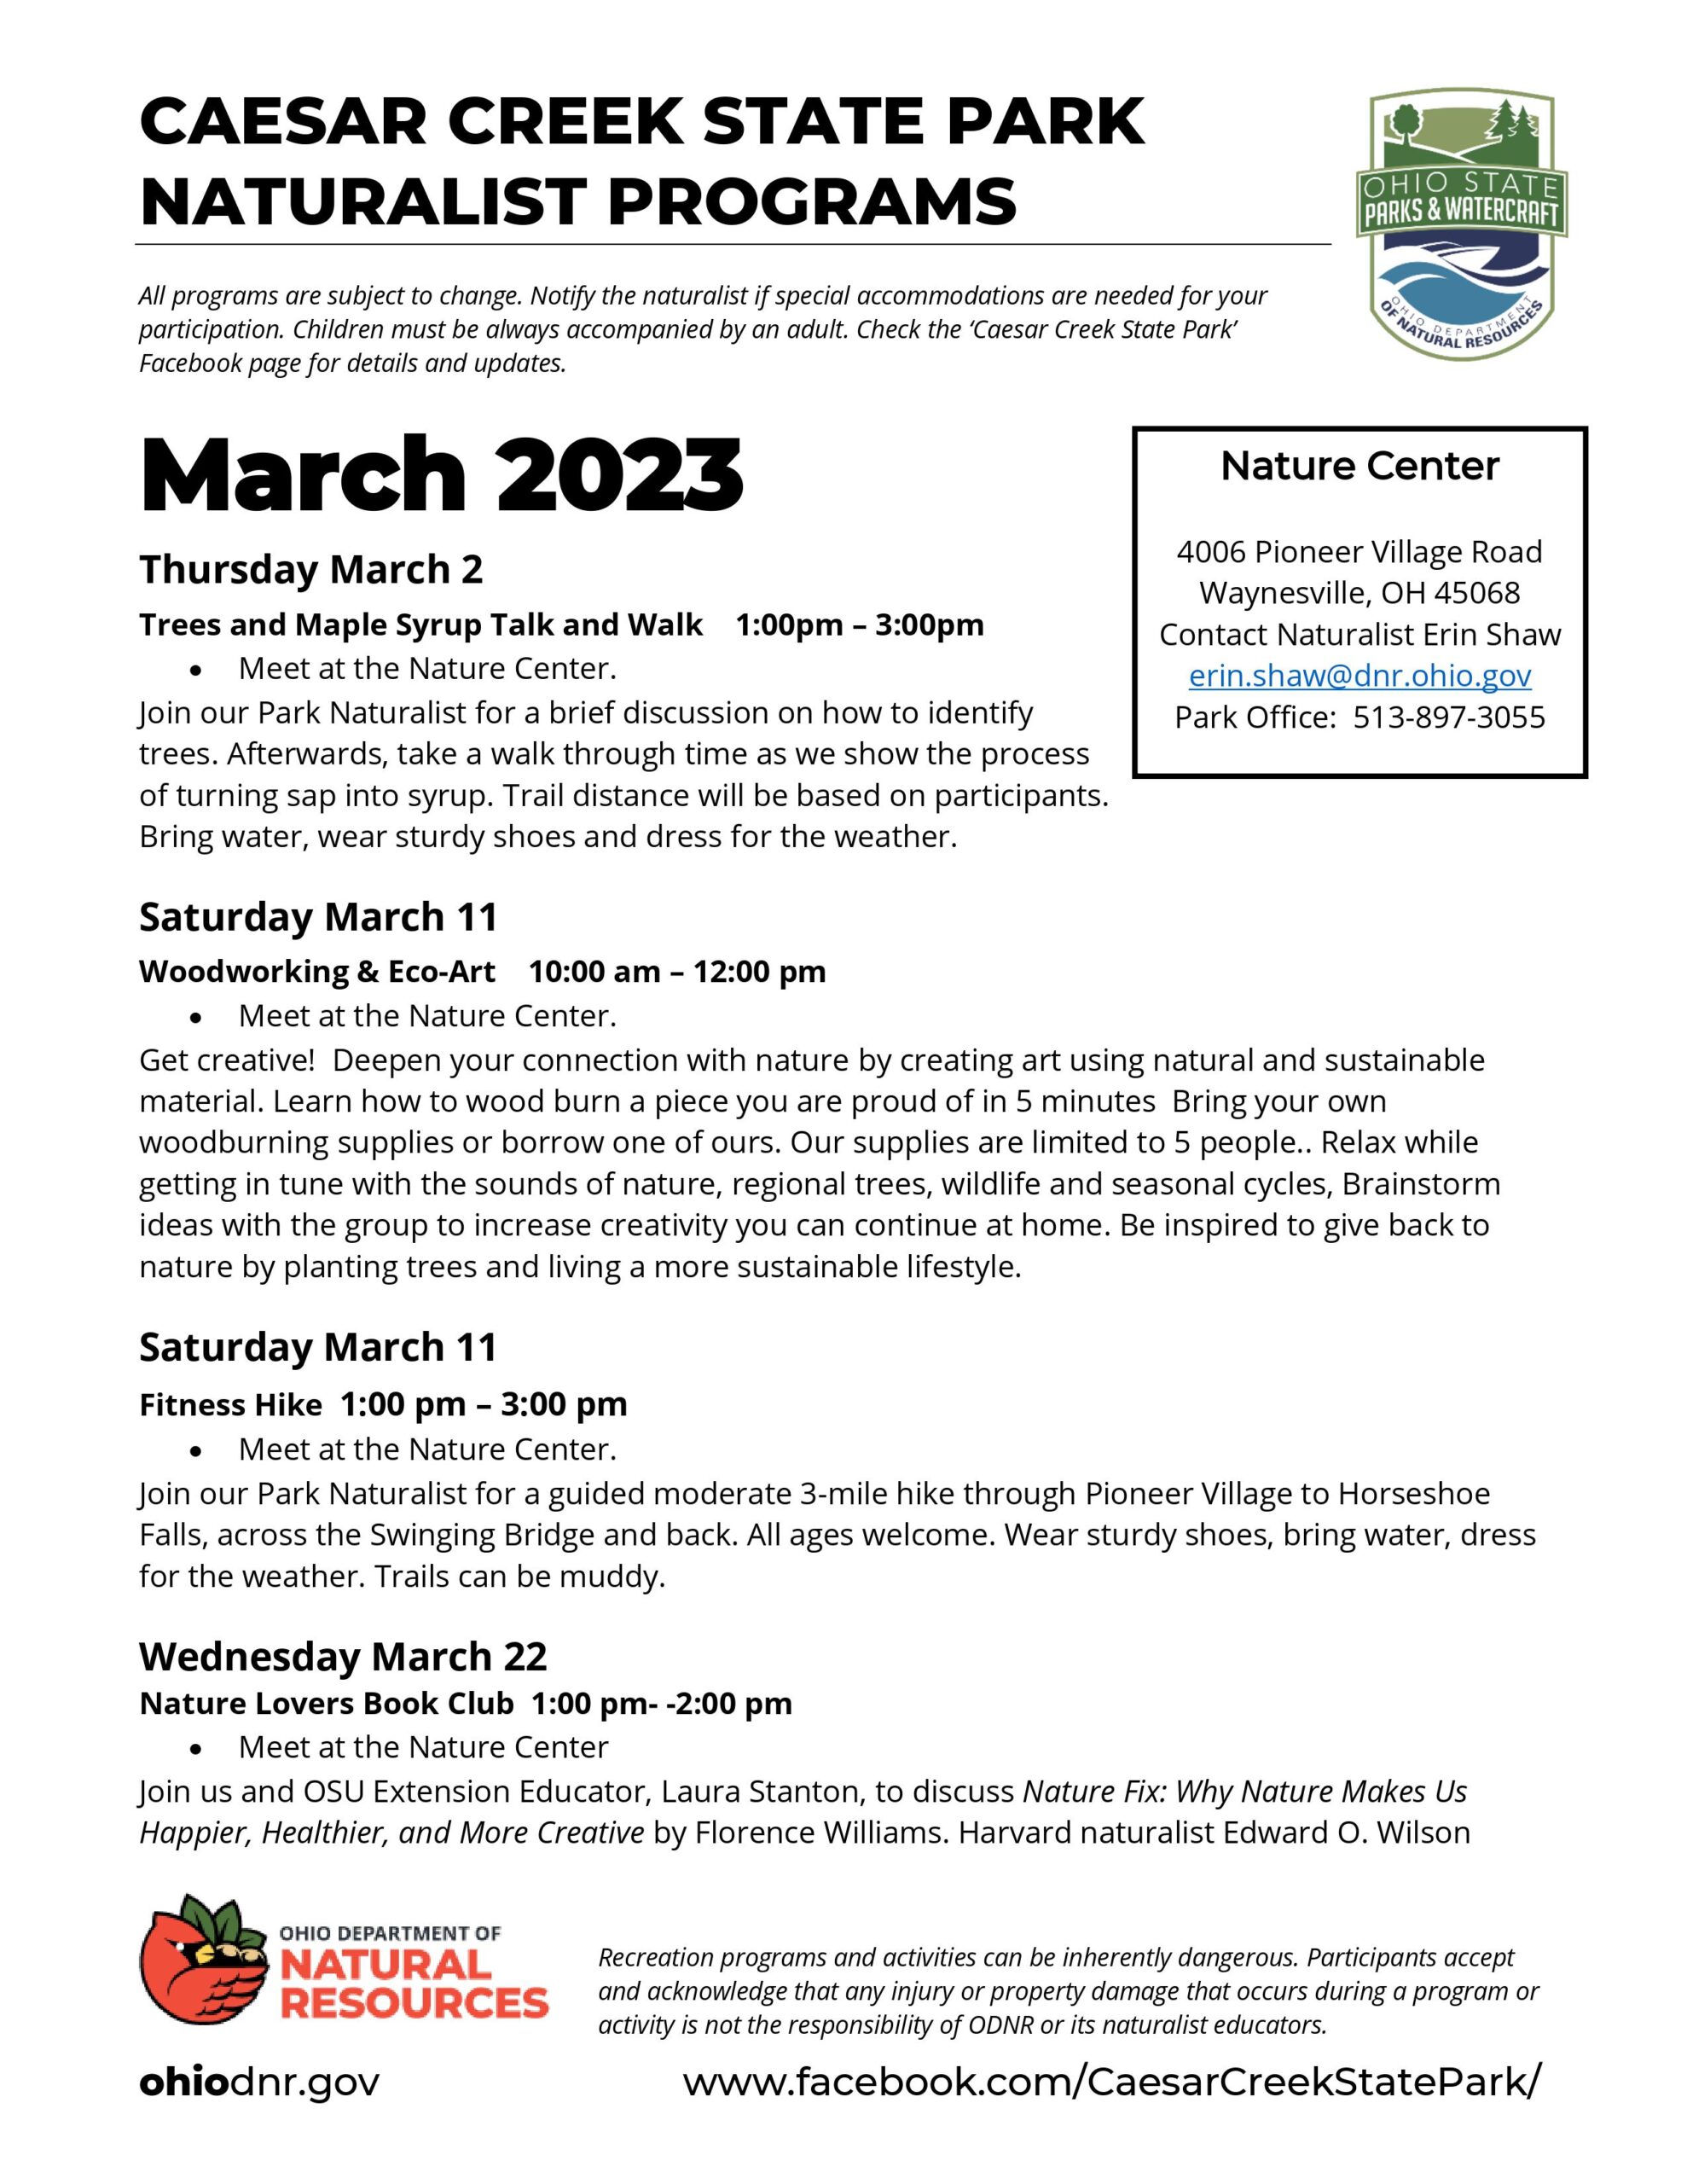 Caesar Creek State Park Naturalist Programs March 2023